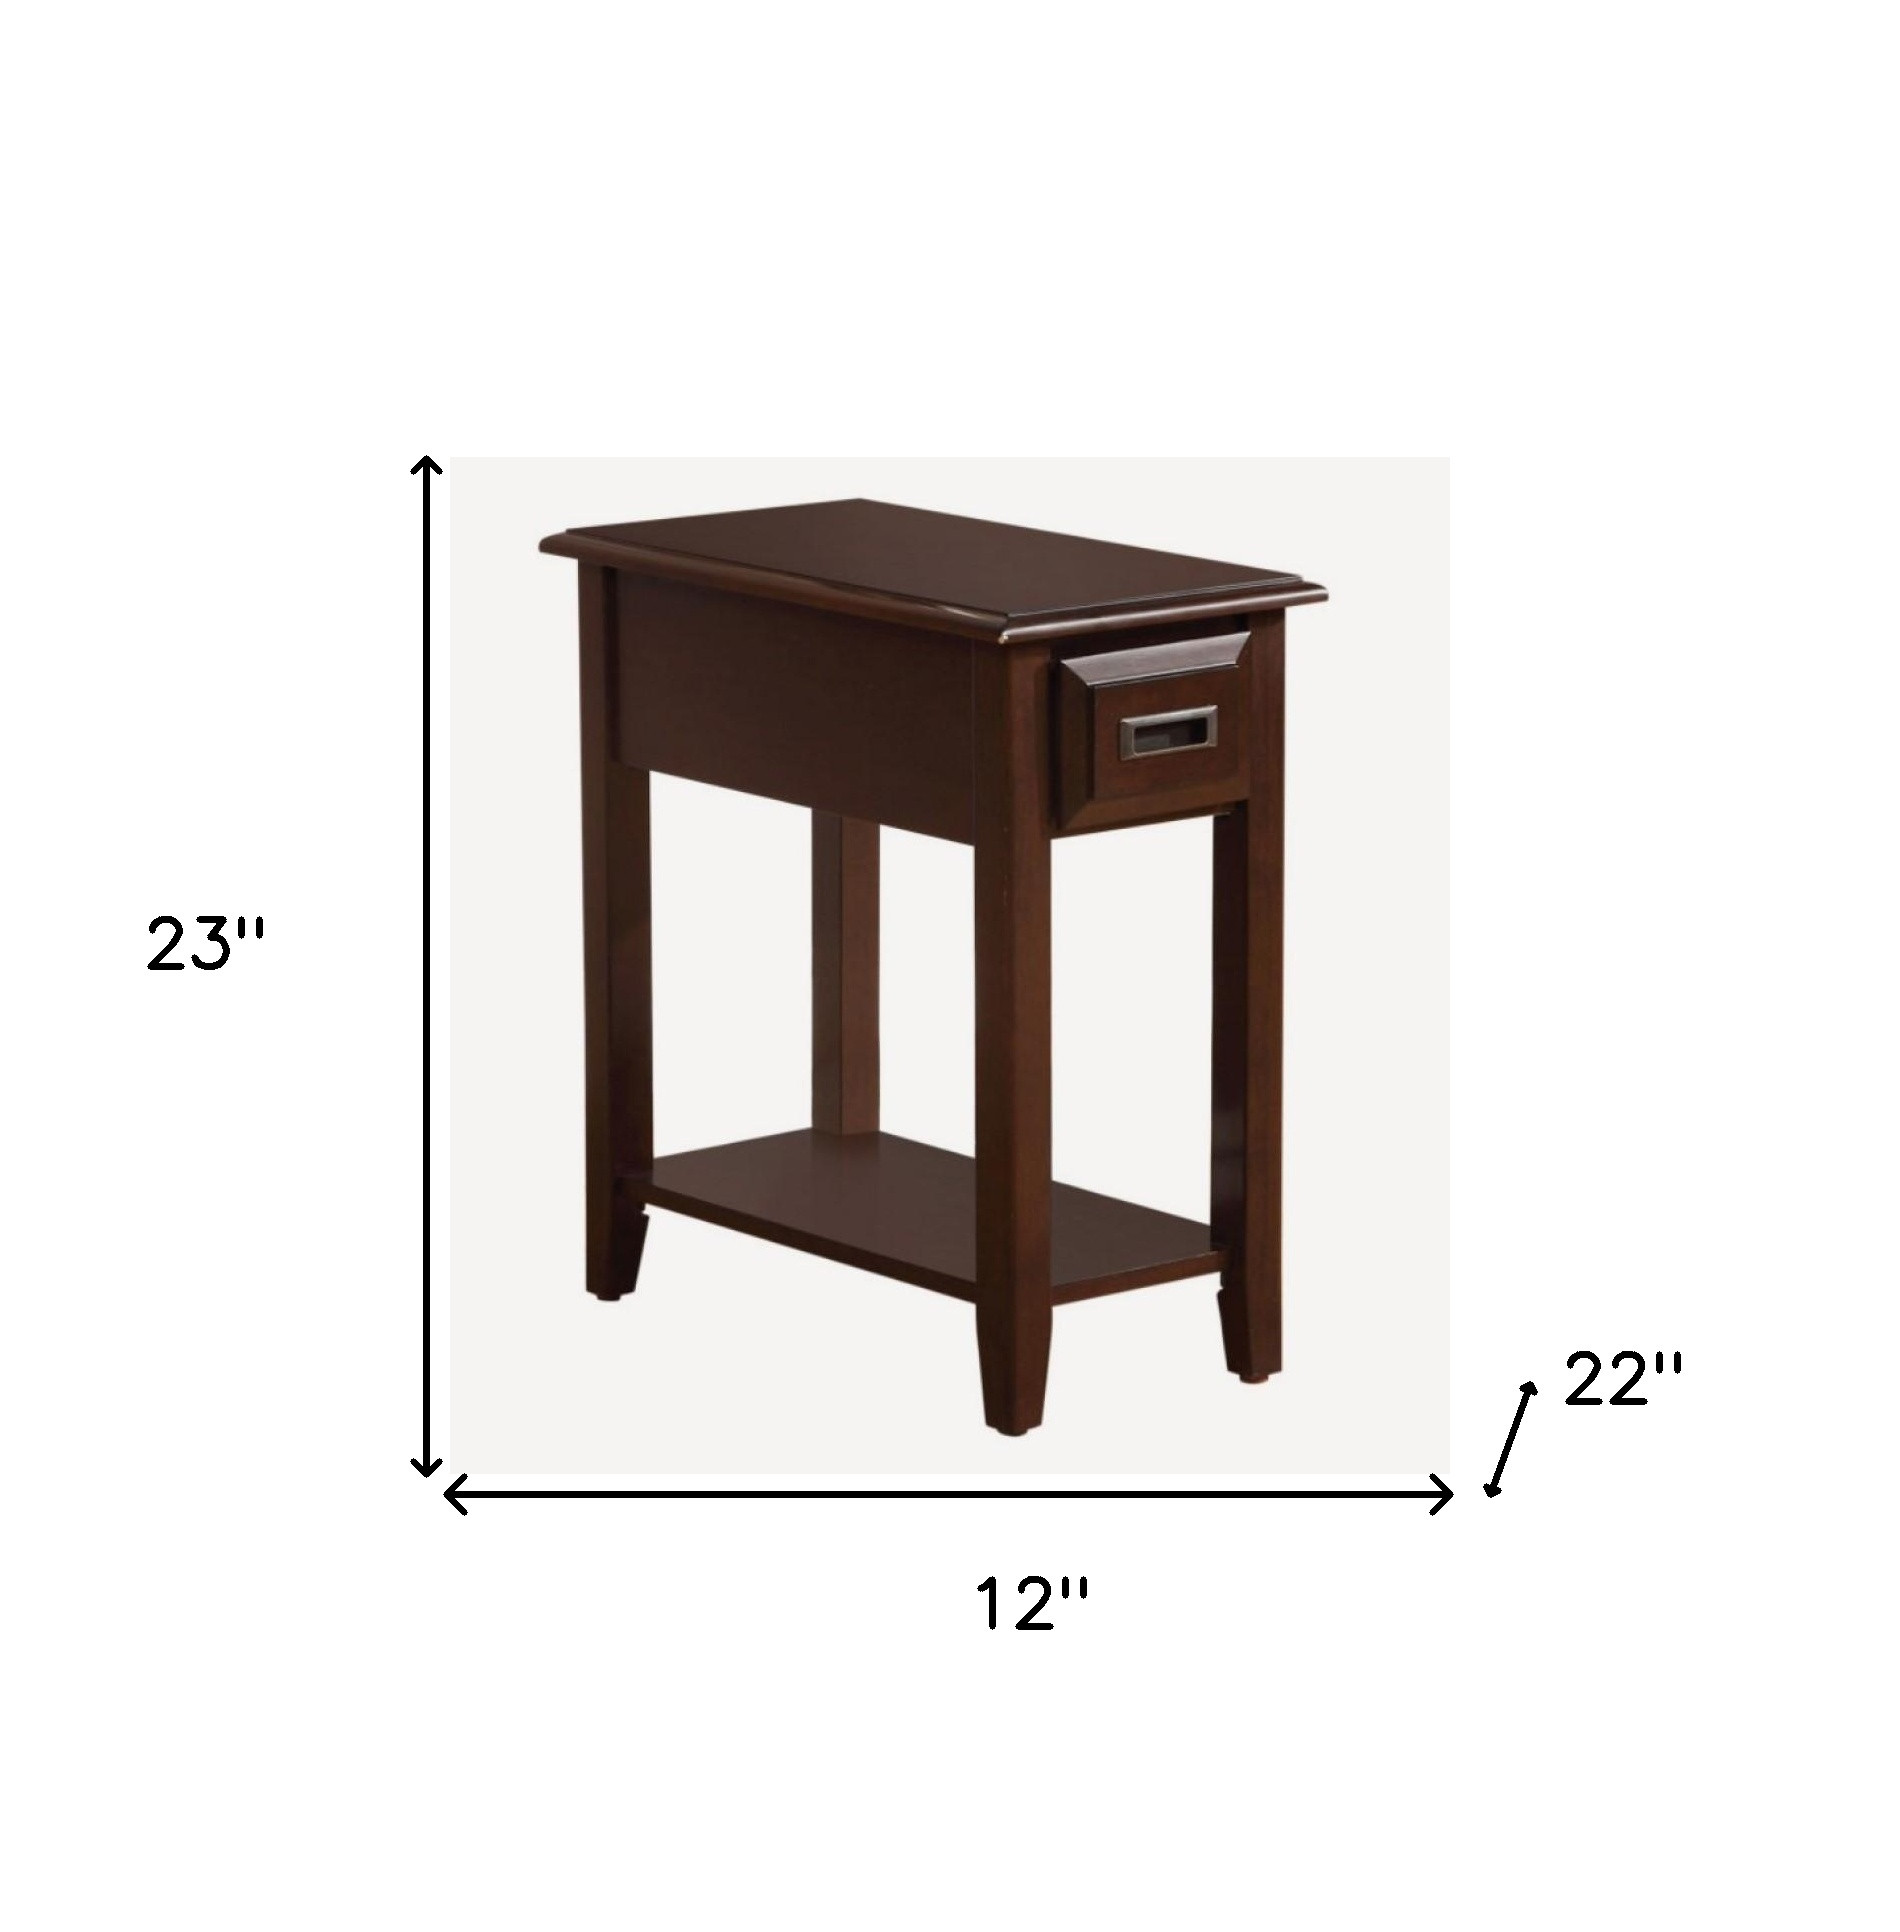 12" X 22" X 23" Dark Cherry Rubber Wood Side Table